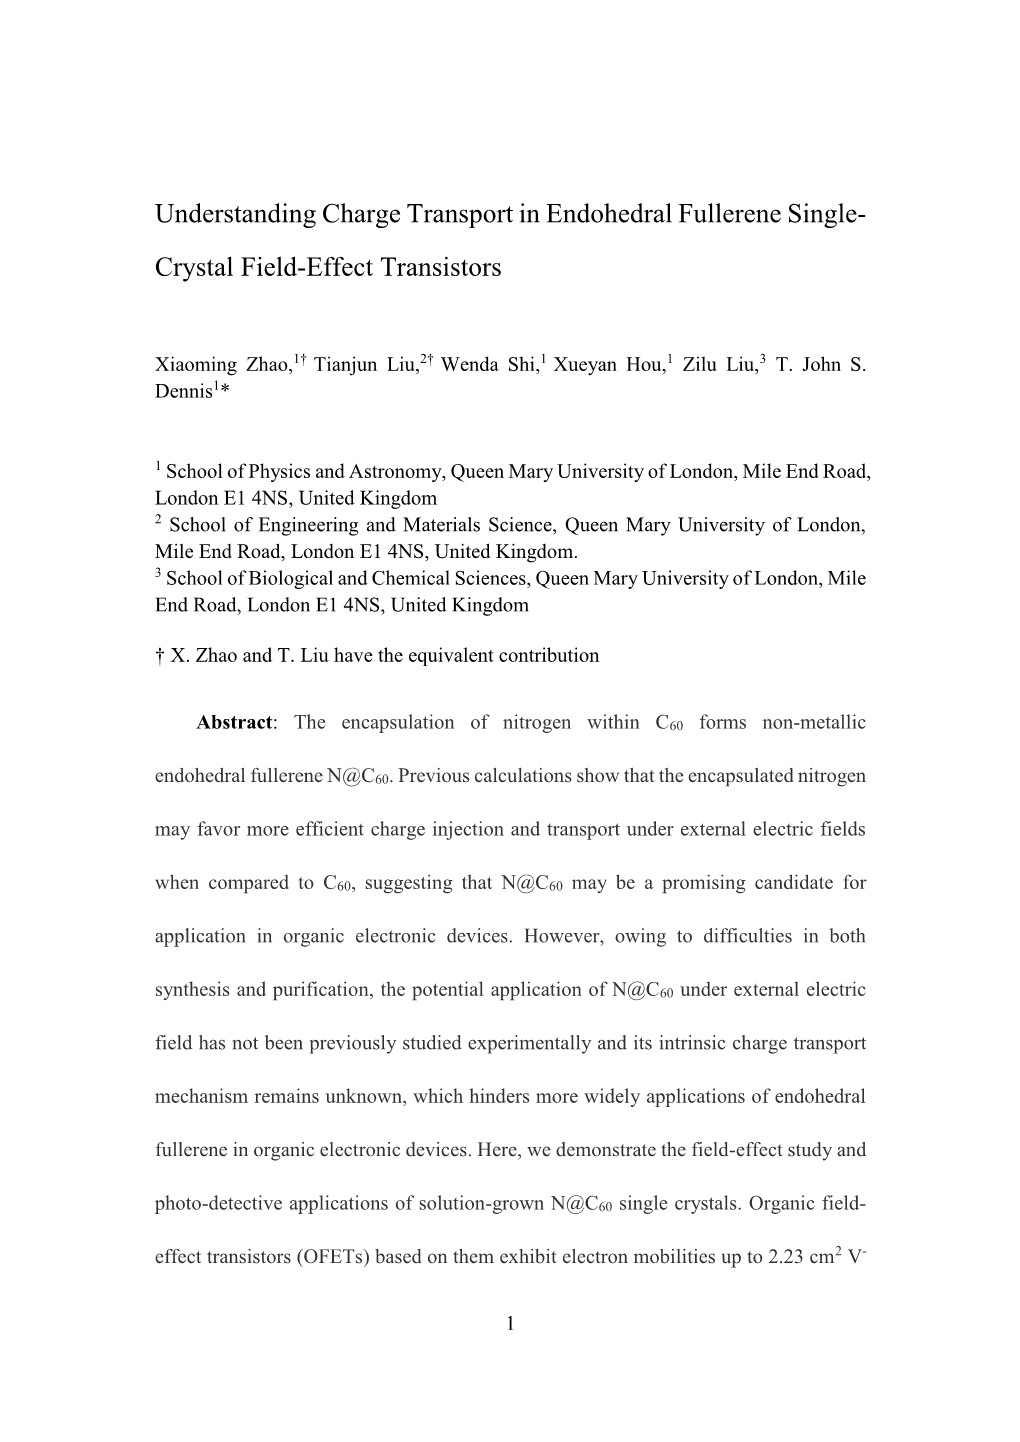 Understanding Charge Transport in Endohedral Fullerene Single- Crystal Field-Effect Transistors